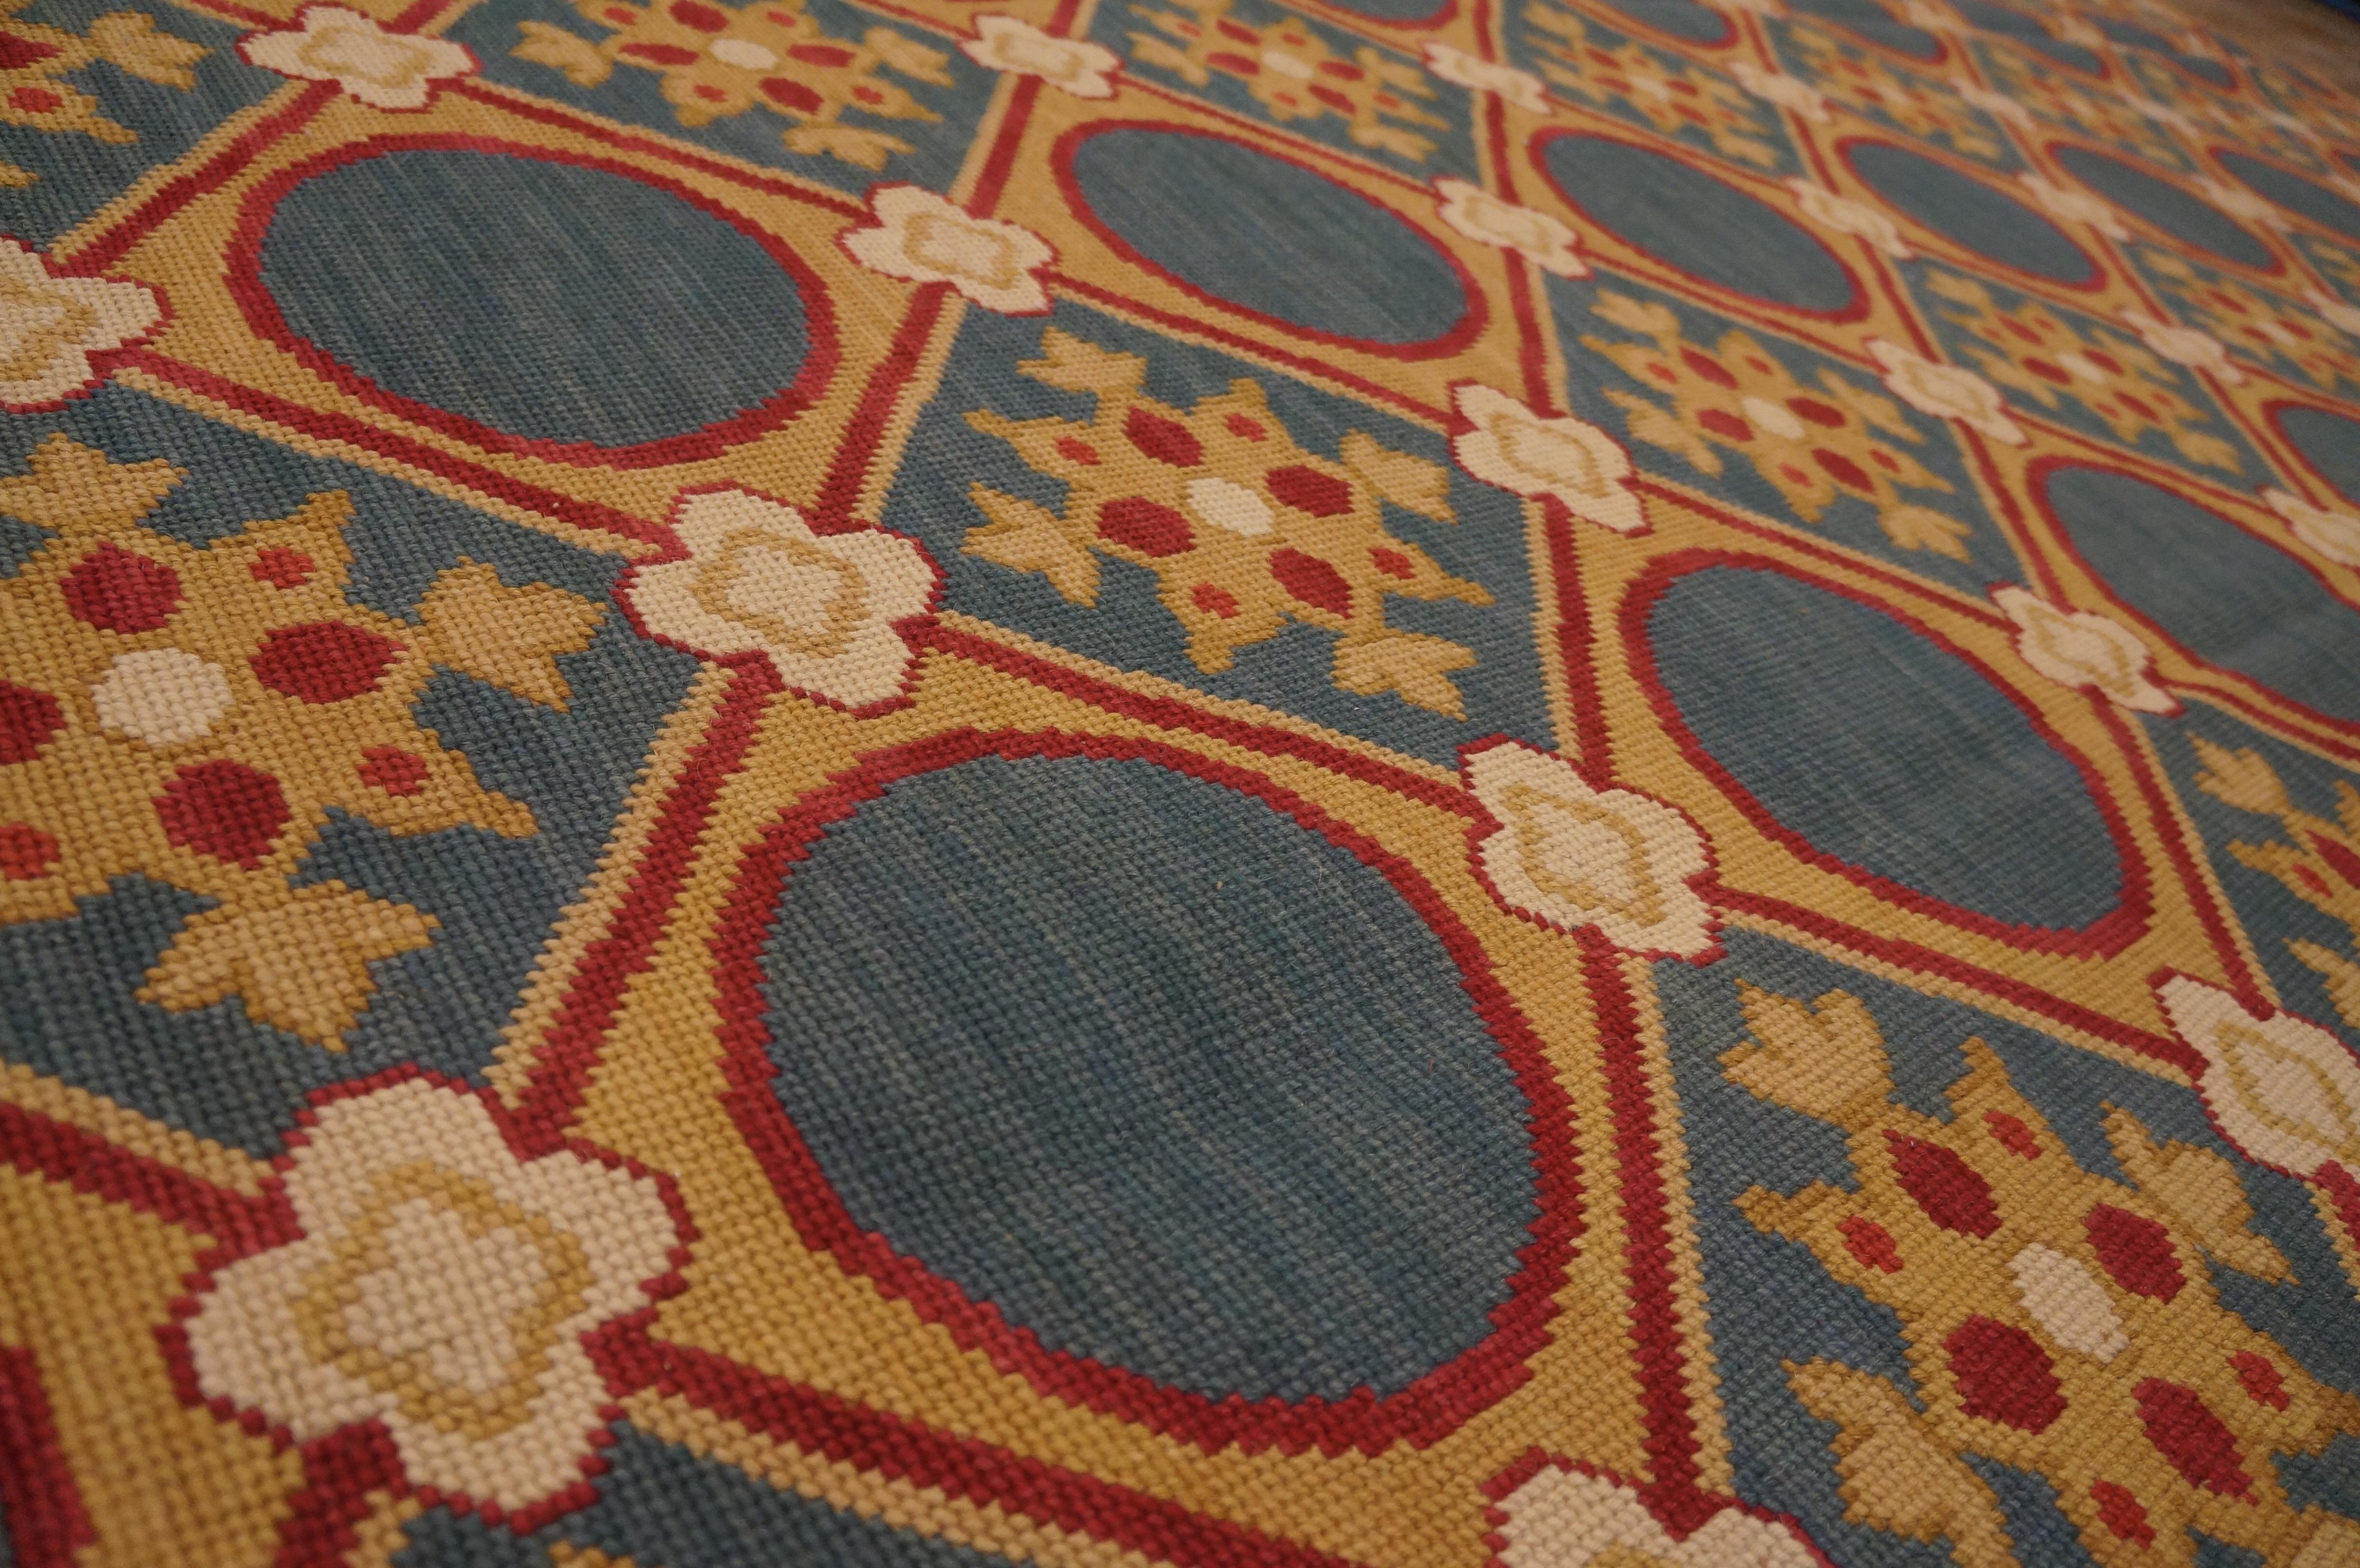  Contemporary Handwoven Needlepoint Flat Weave Carpet ( 9' x 12' - 275 x 365 cm  5